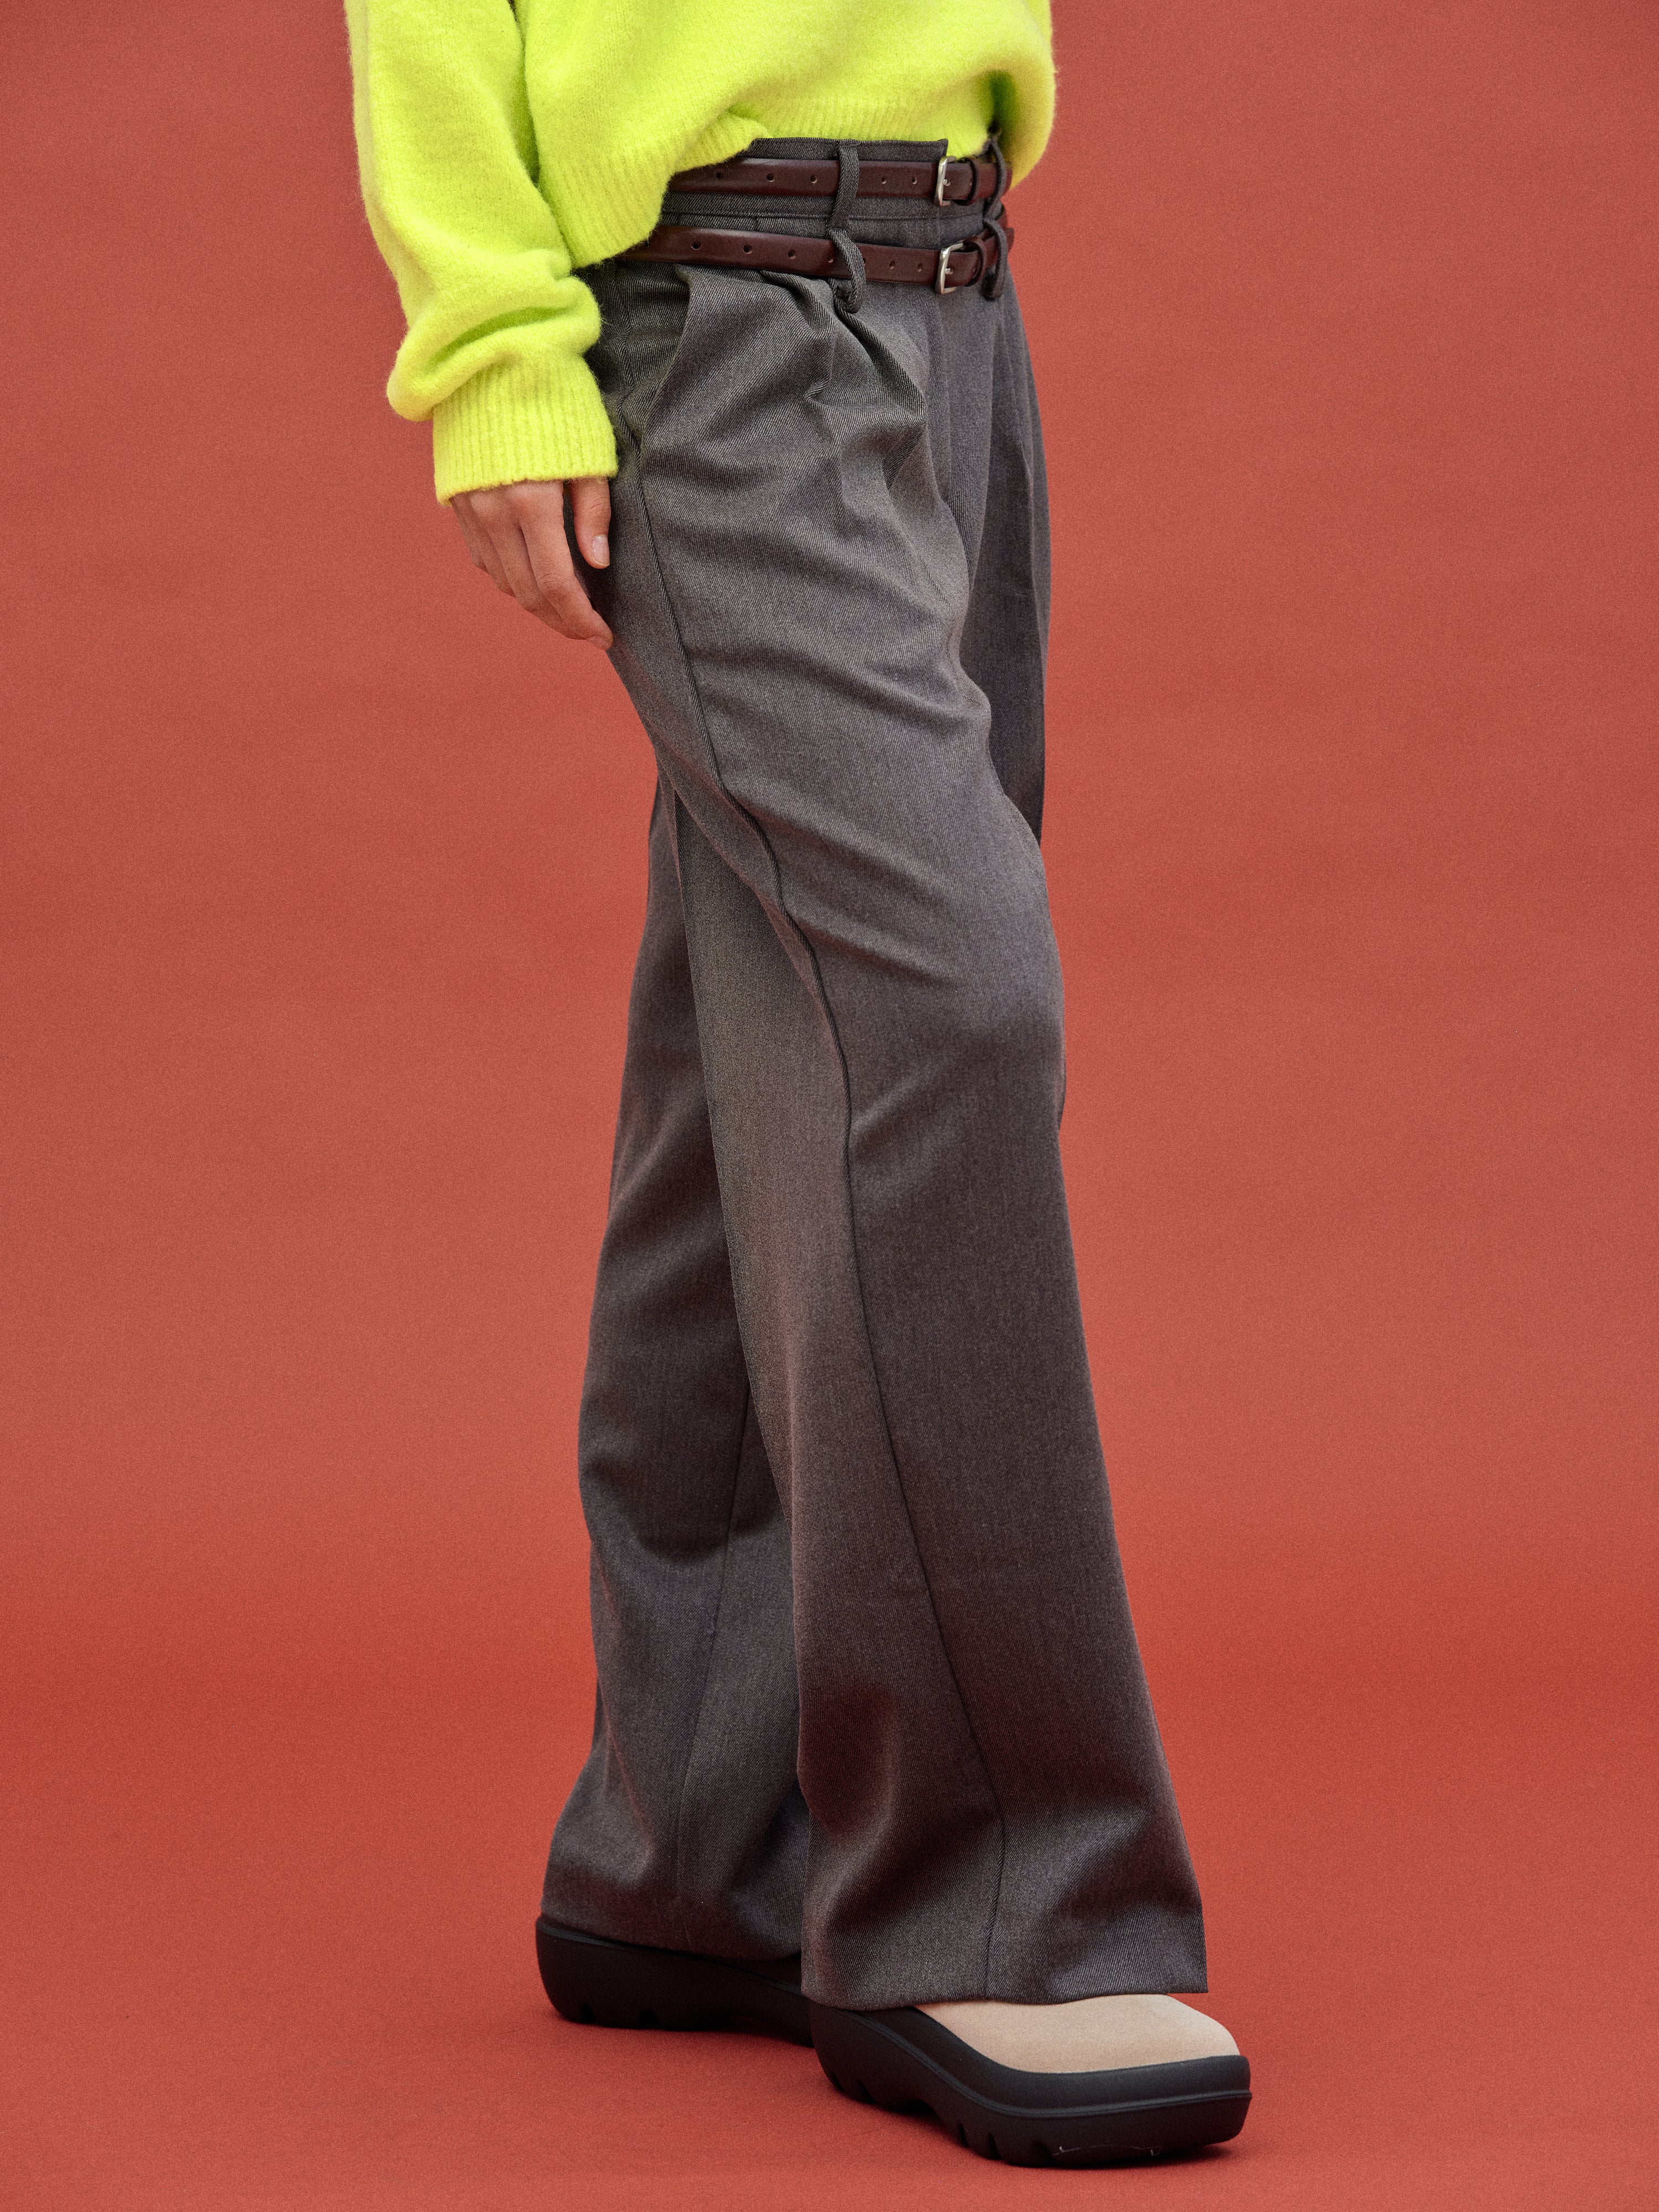 Jake's Men's Pants Trouser Straight Grey Wool Pocket Hook Loop Zip Size  EU-50 | eBay